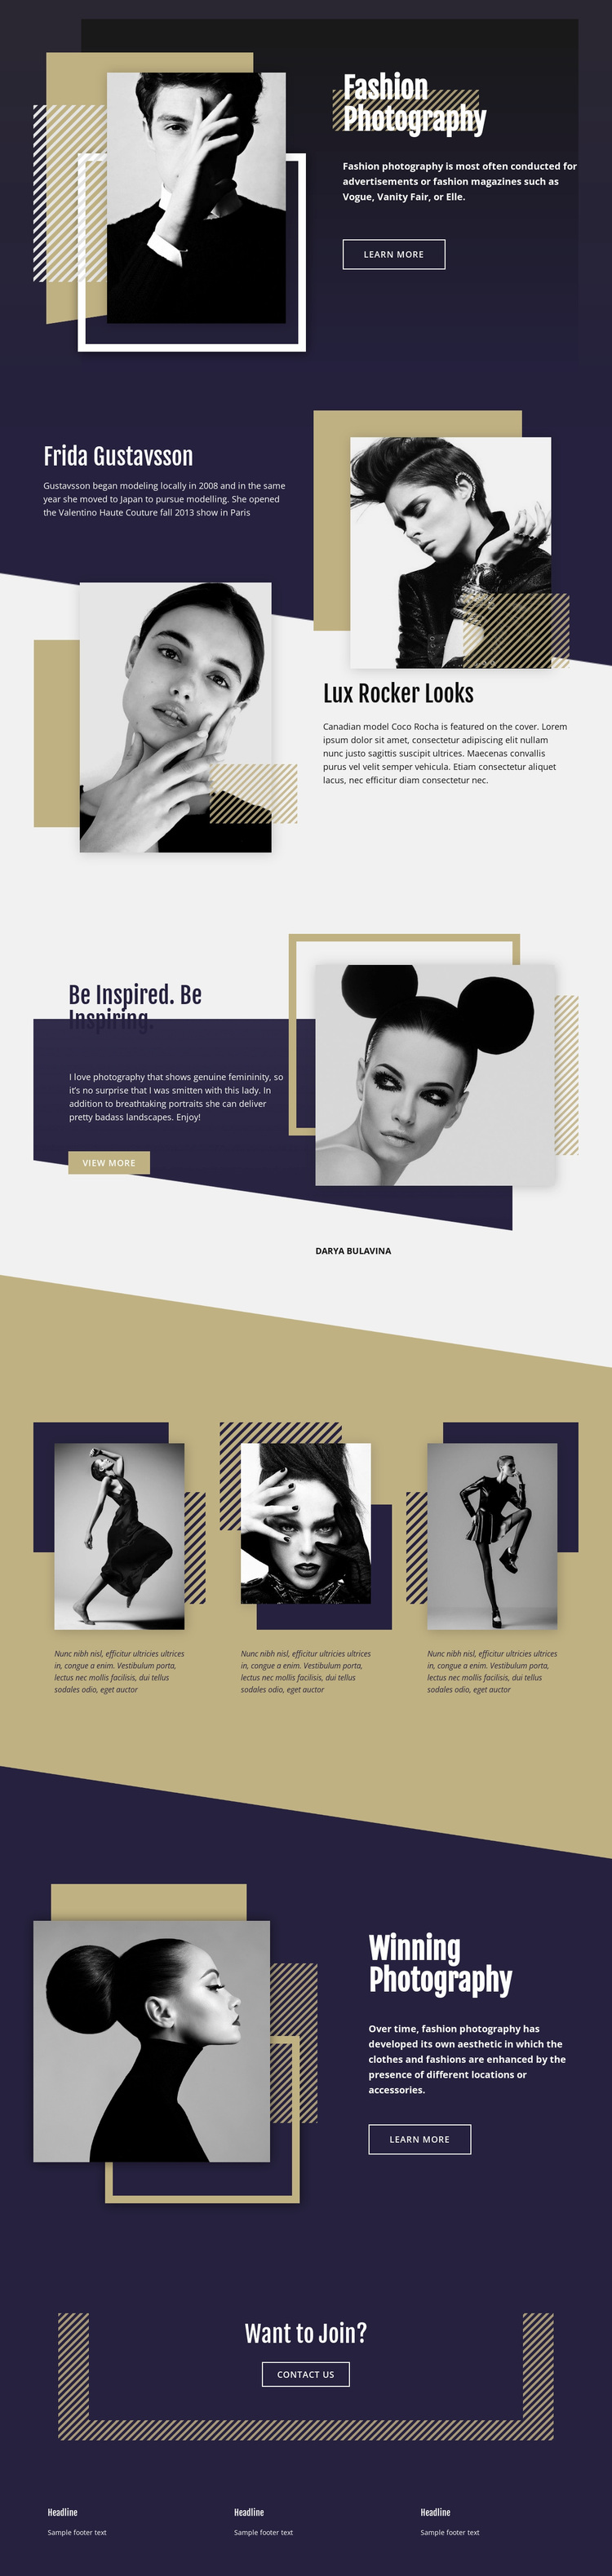 Fashion Photography Website Design